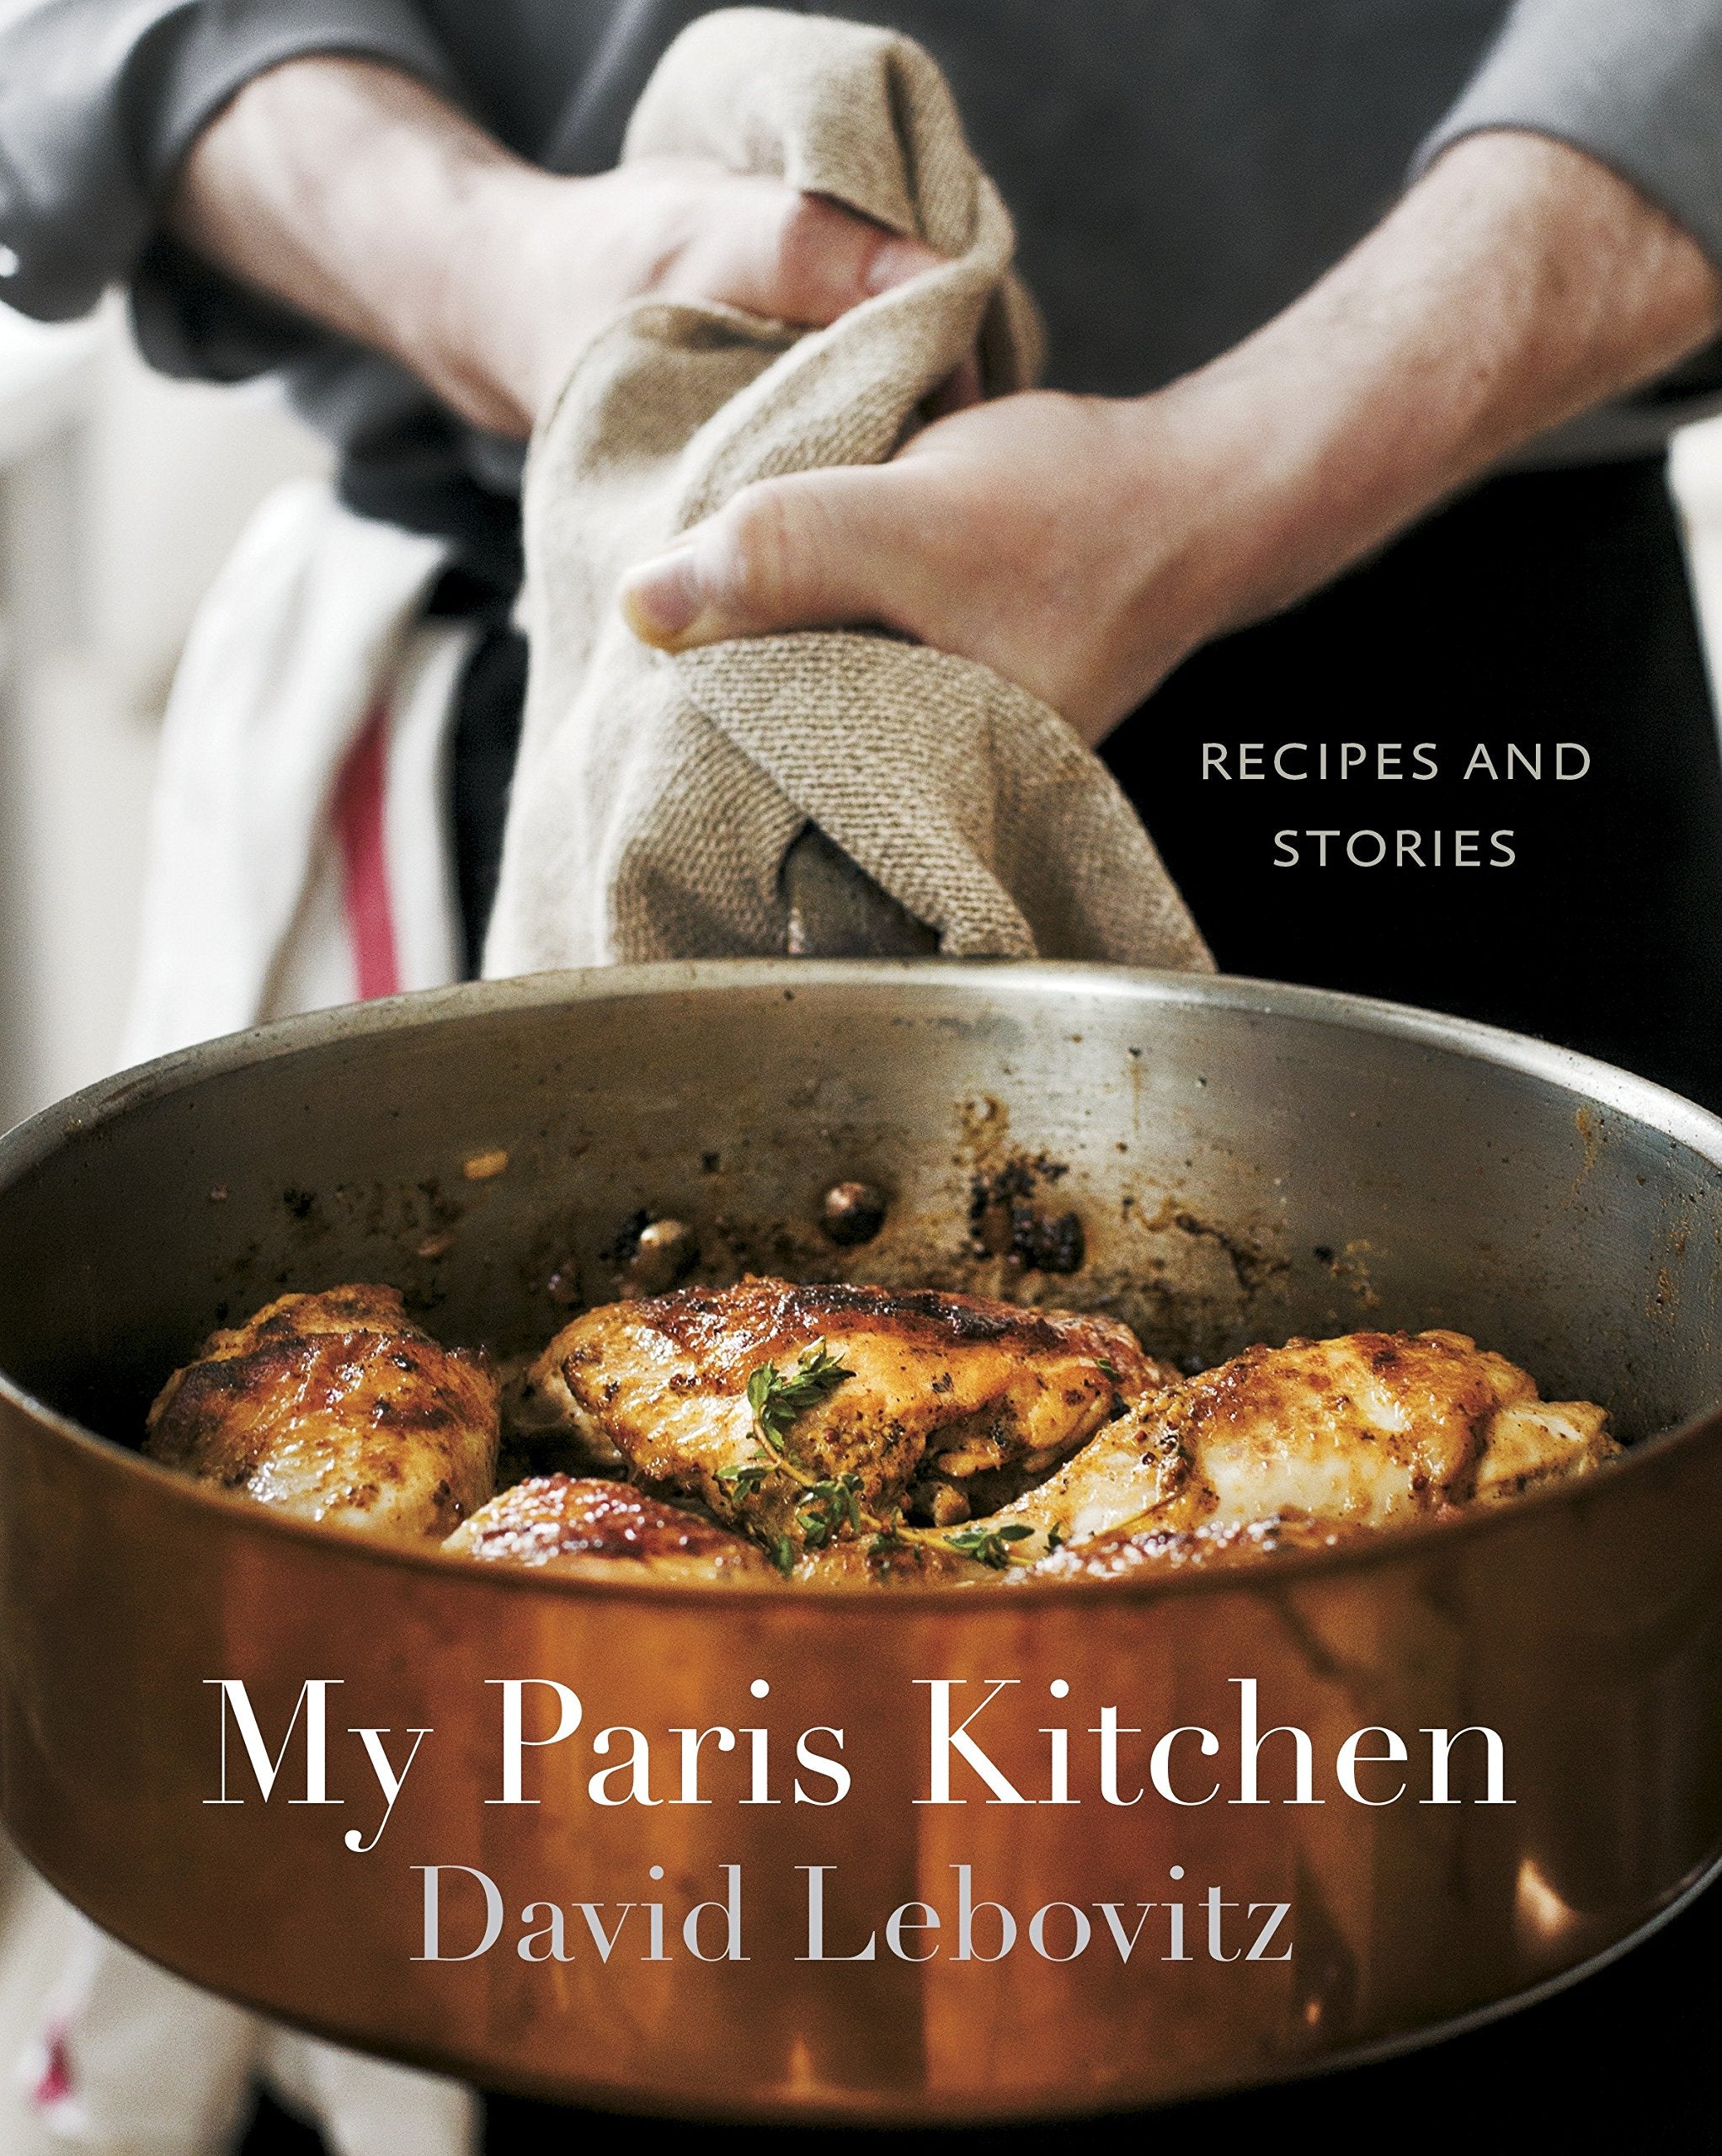 My Paris Kitchen: Recipes and Stories (David Lebovitz)